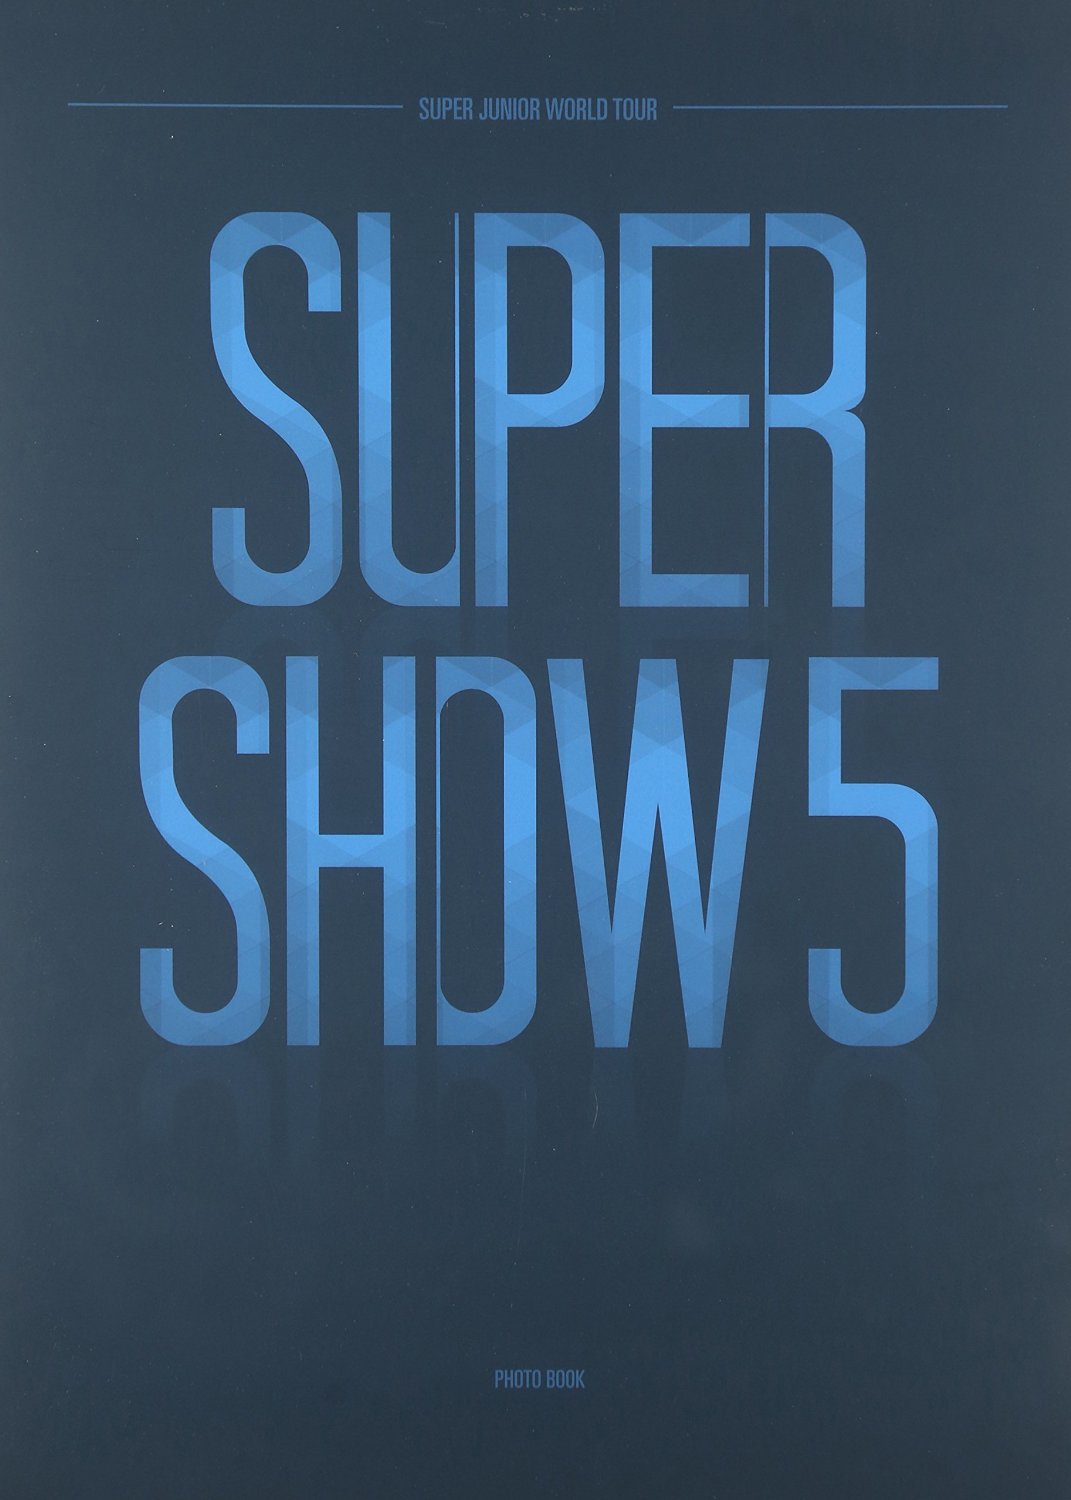 SUPER JUNIOR(슈퍼주니어) - WORLD TOUR SUPER SHOW5 공연화보집